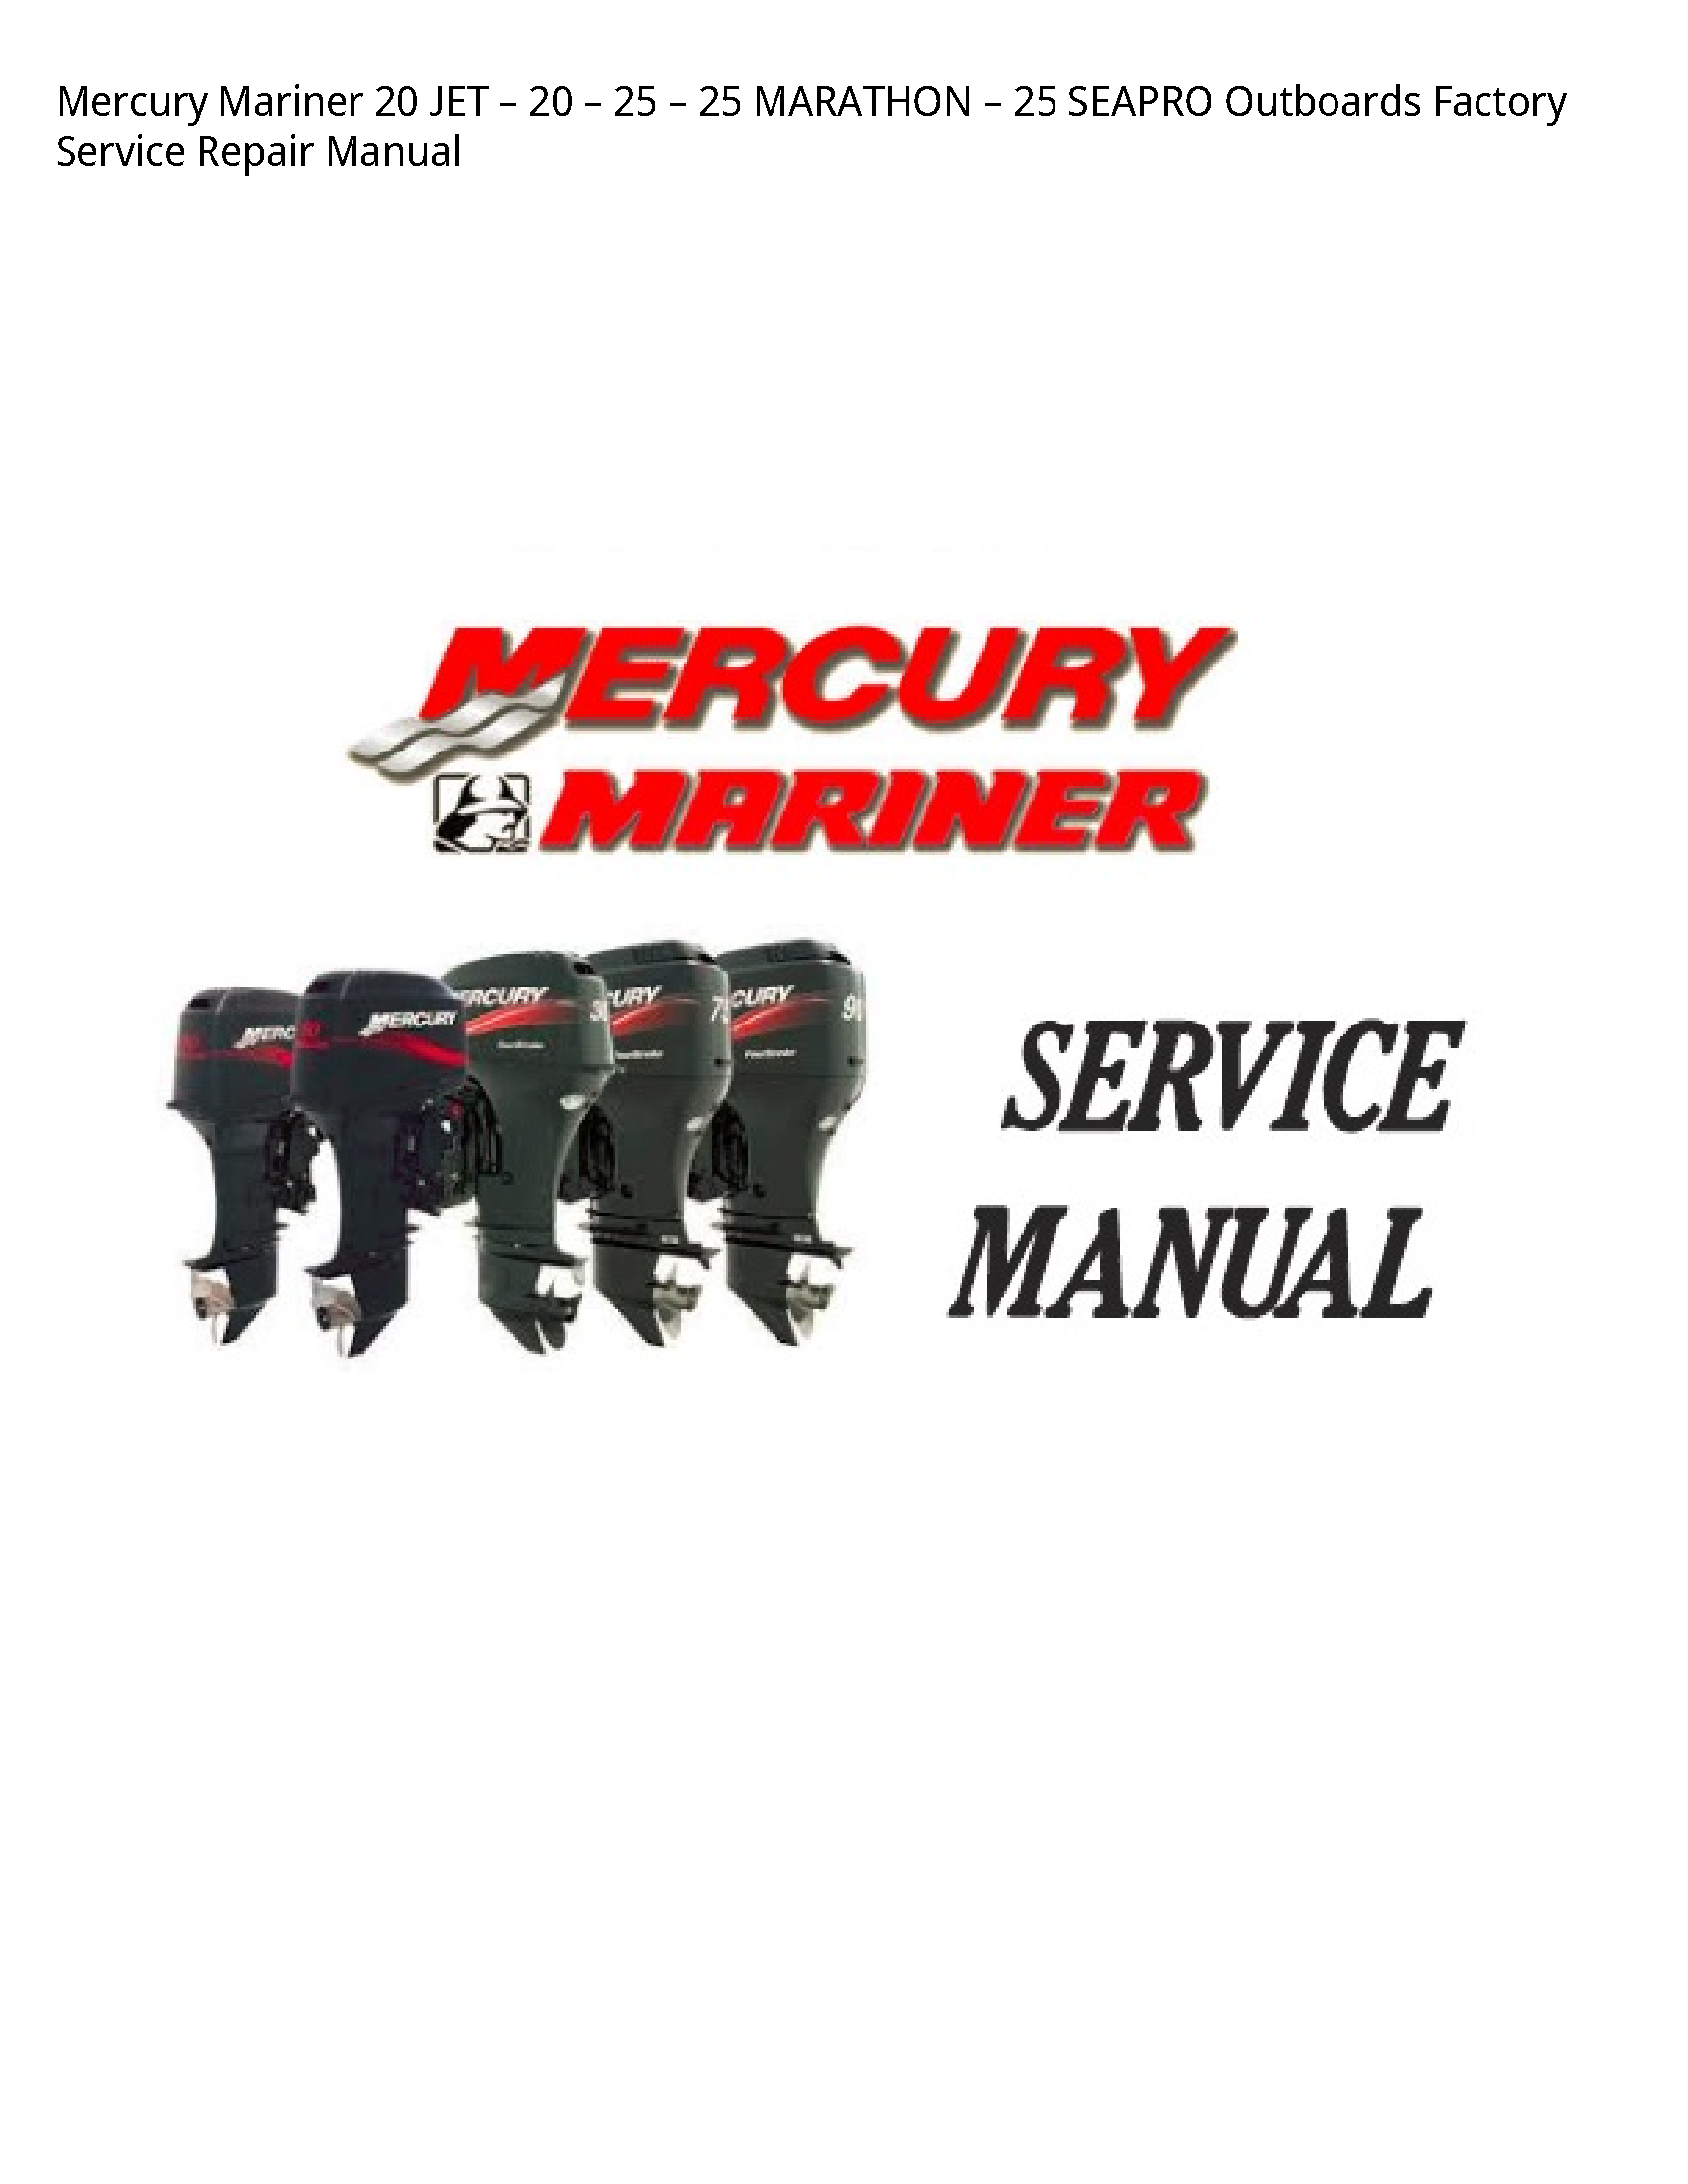 Mercury Mariner 20 JET MARATHON SEAPRO Outboards Factory manual